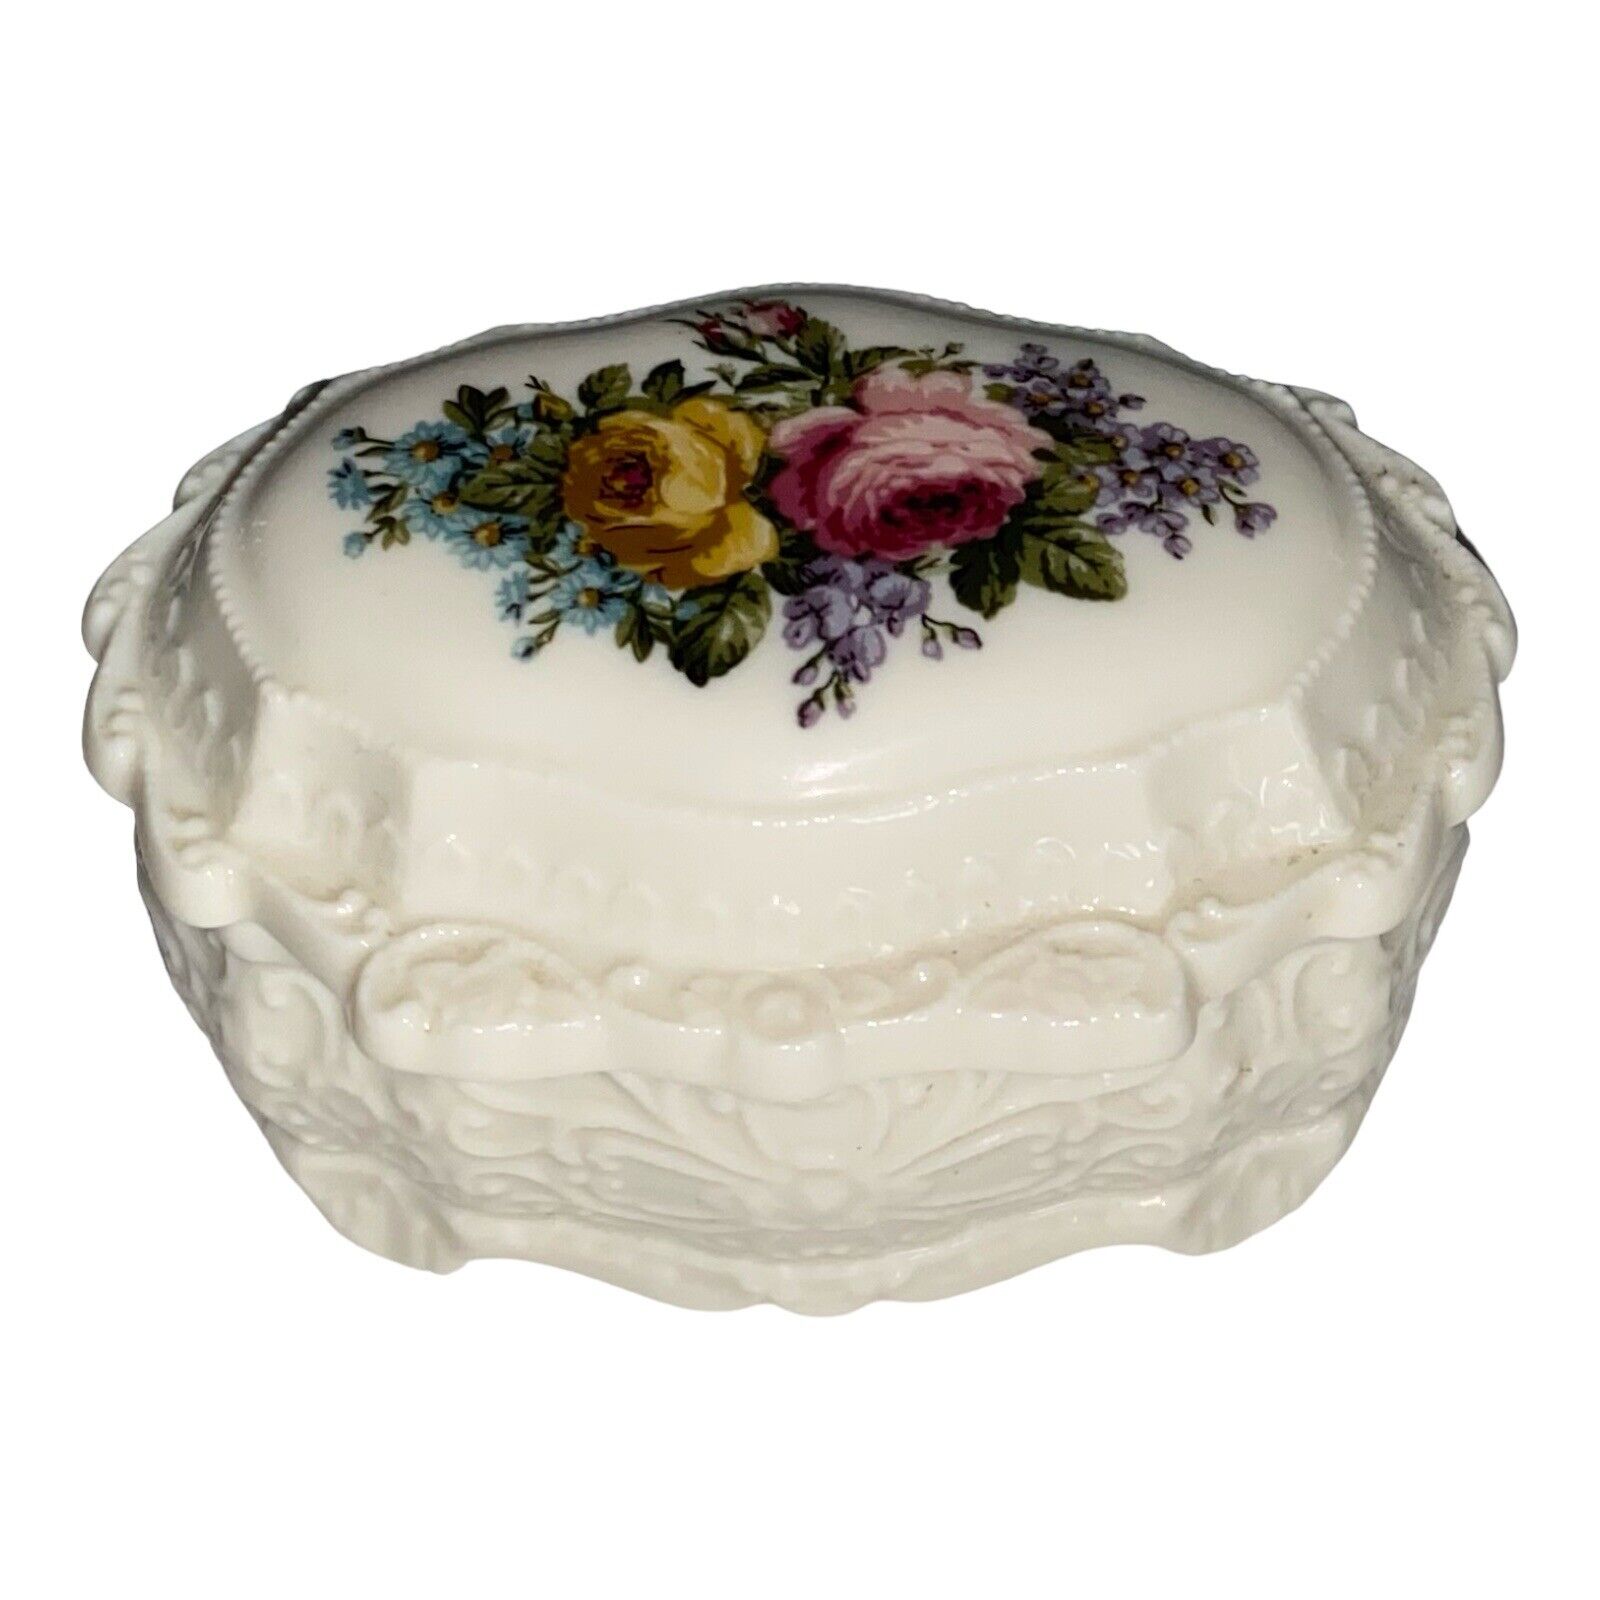 BEAUTIFUL Vintage Victorian White Floral Jewelry Trinket Keepsake Box Lid Flower